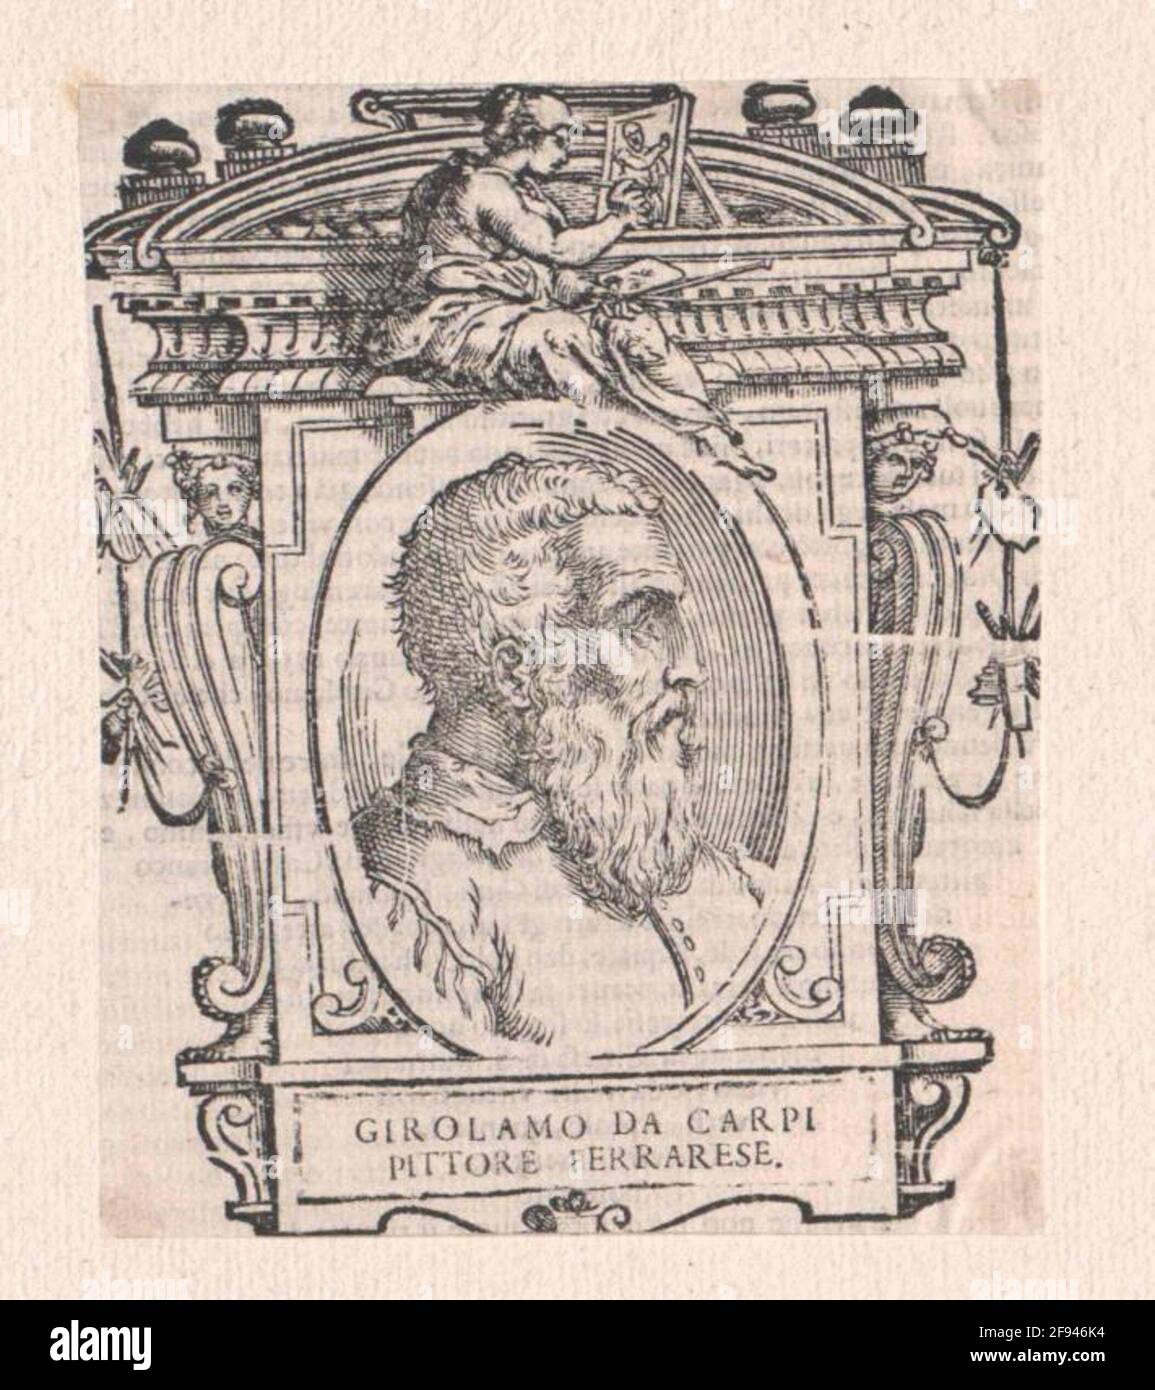 Carpi, Girolamo da. Stockfoto